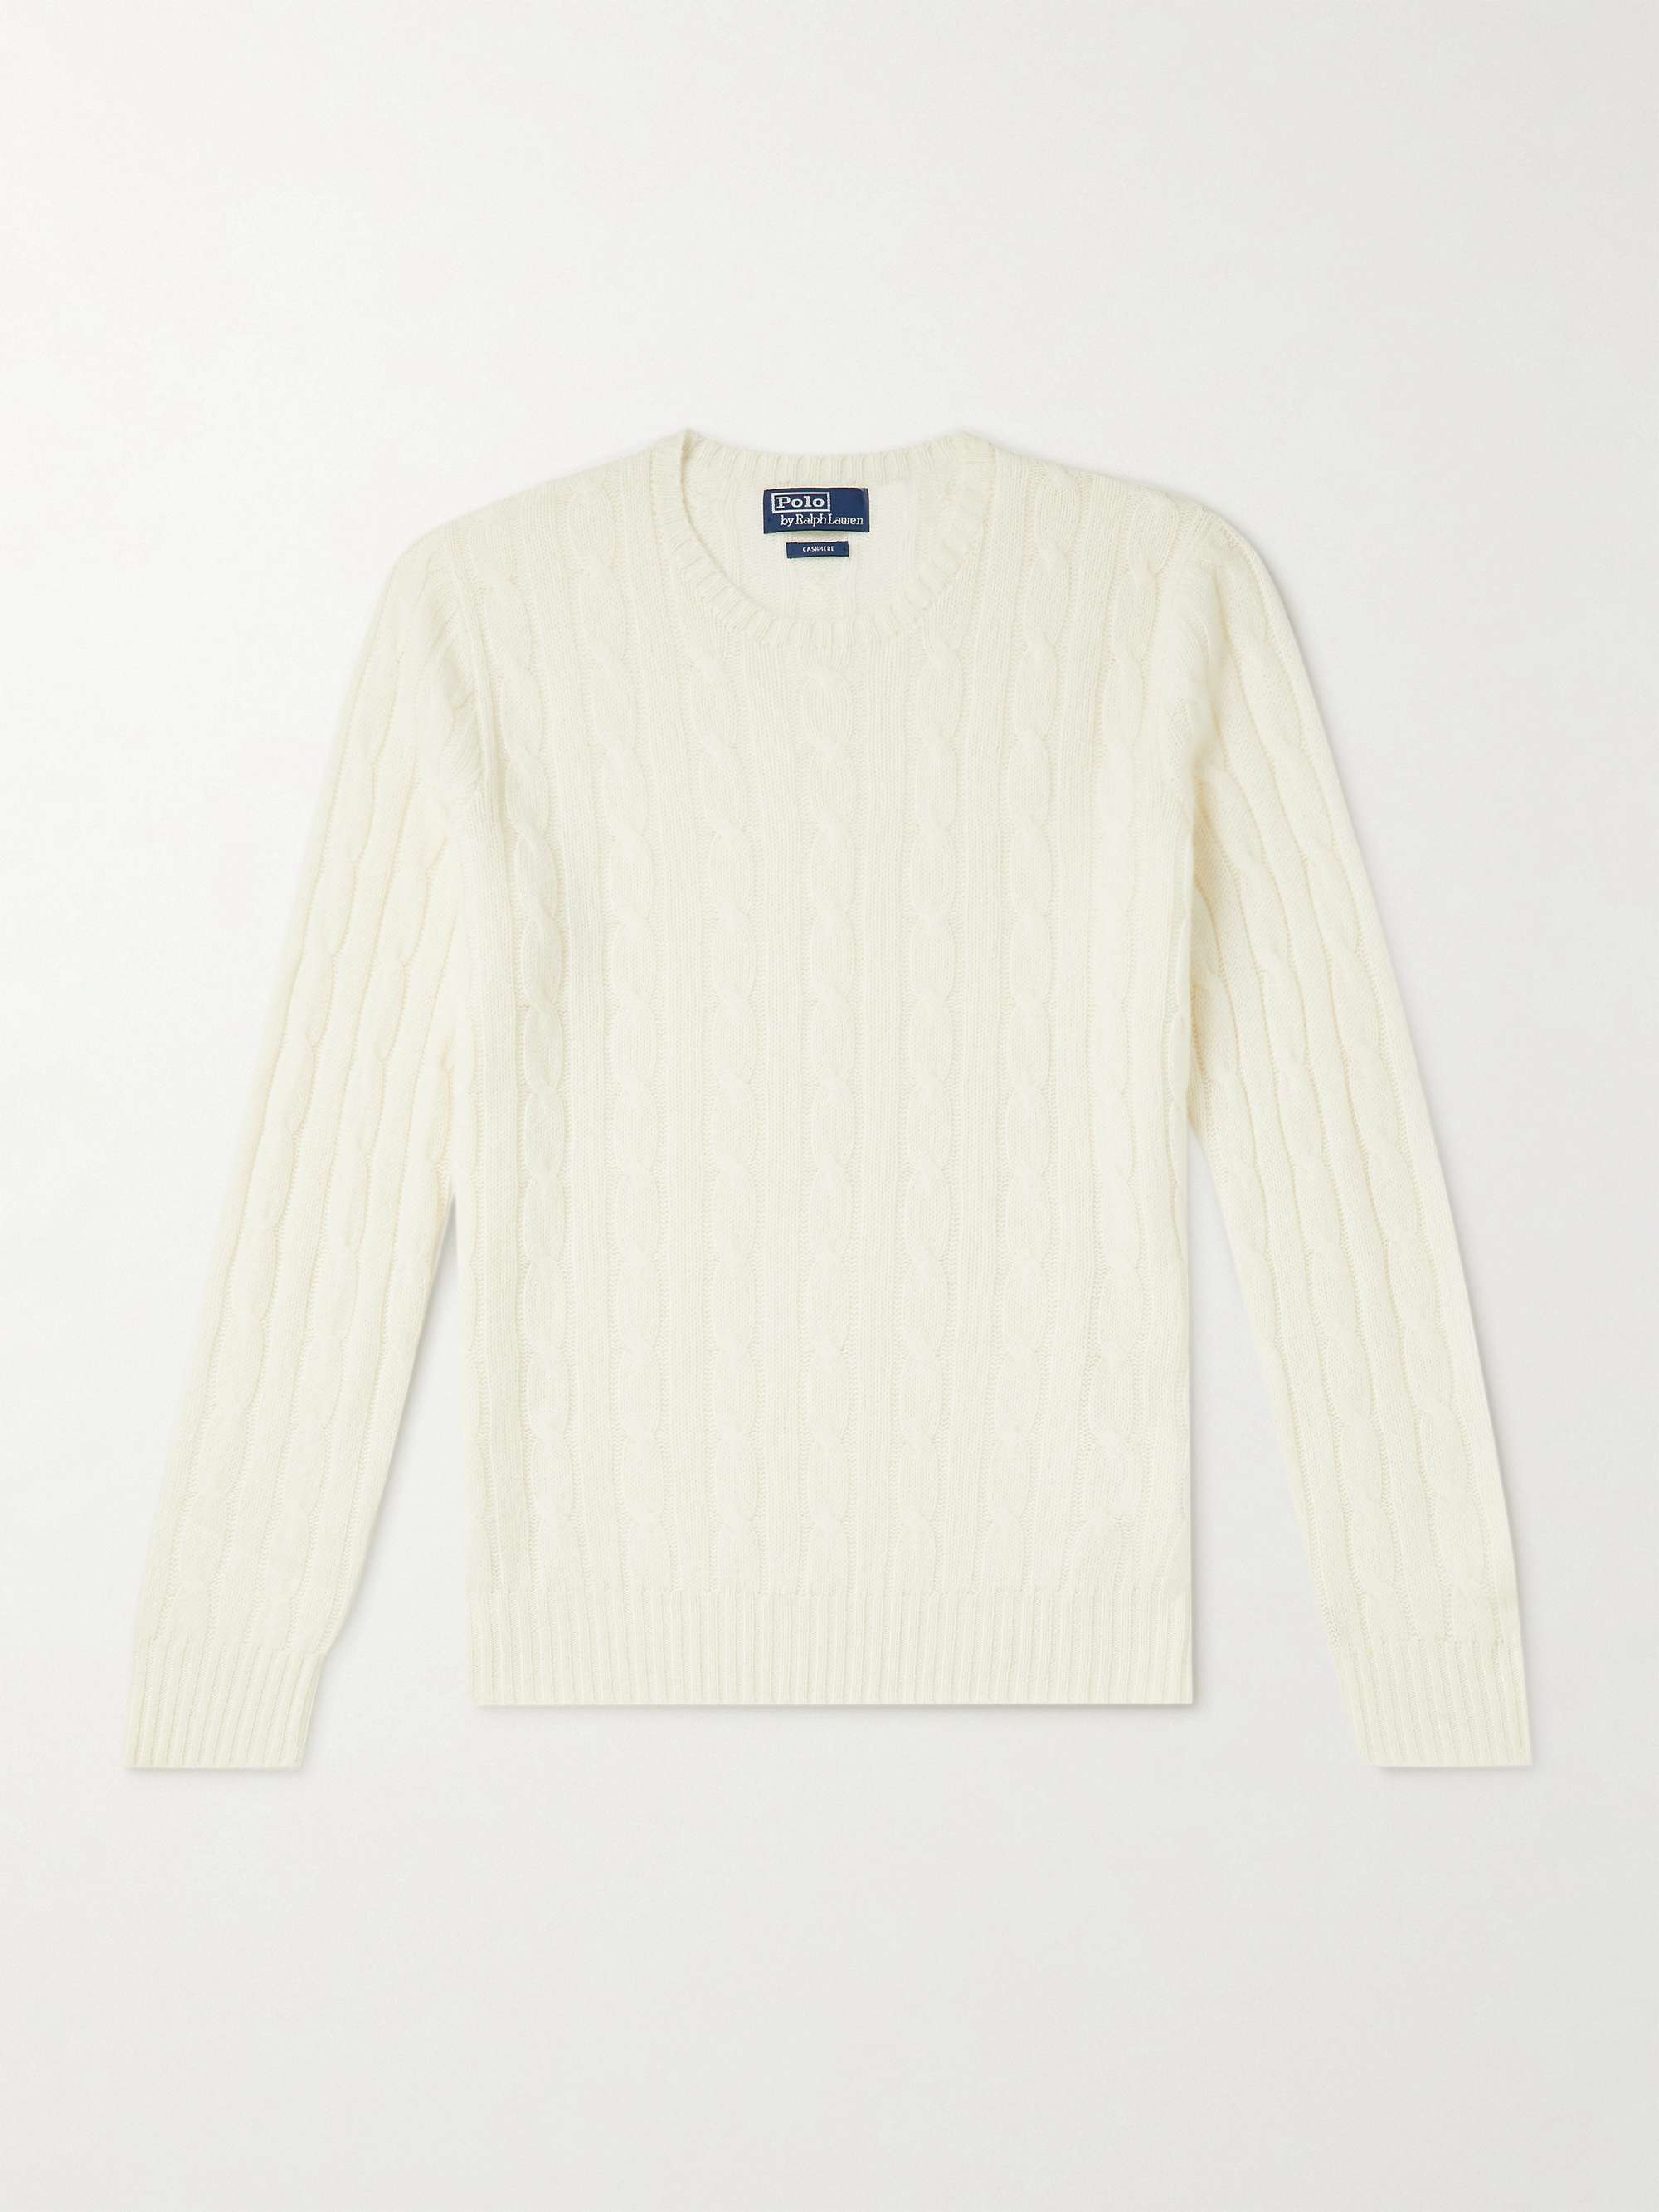 POLO RALPH LAUREN Cable-Knit Cashmere Sweater | MR PORTER